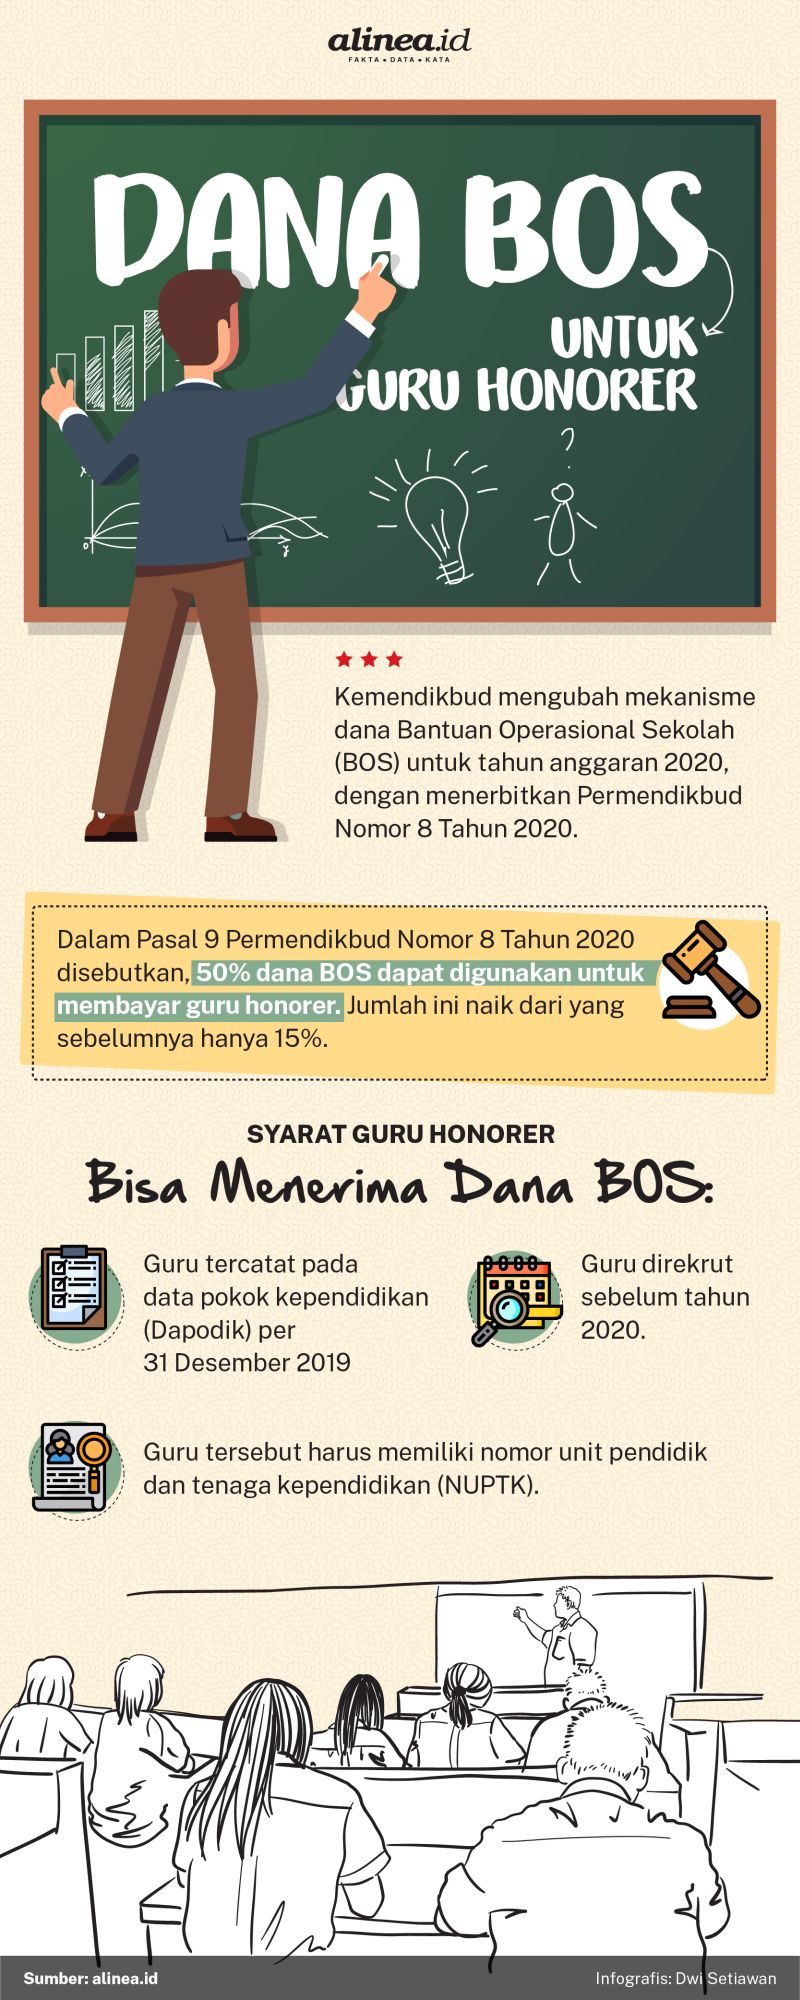 Infografik Dana BOS untuk guru honorer. Alinea.id/Dwi Setiawan. 